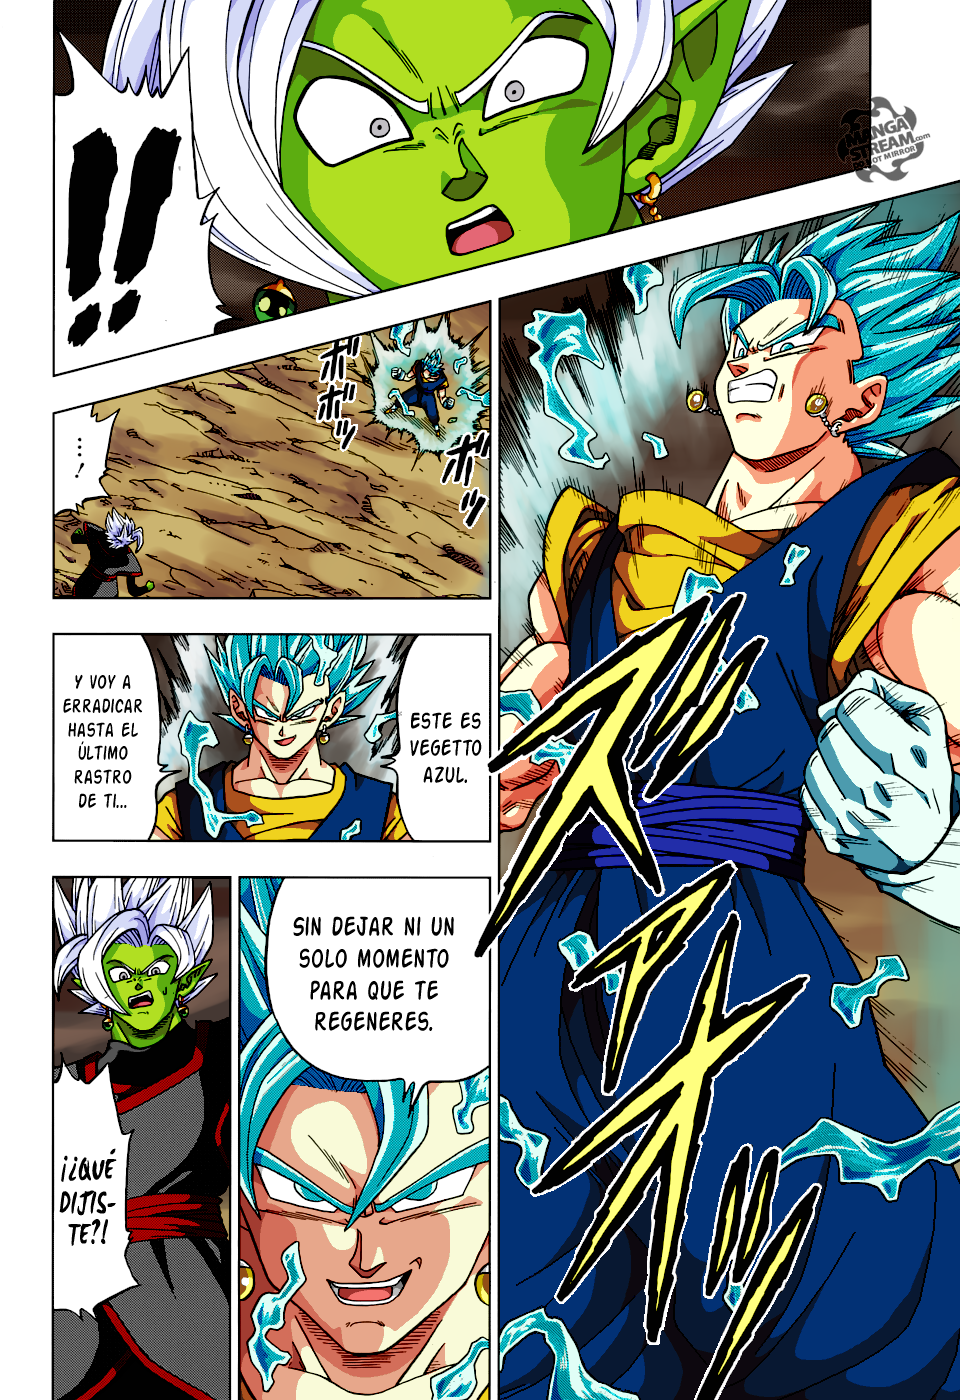 Manga Dragon Ball Super a color pgina 1 by AxelSantiago1234 on DeviantArt